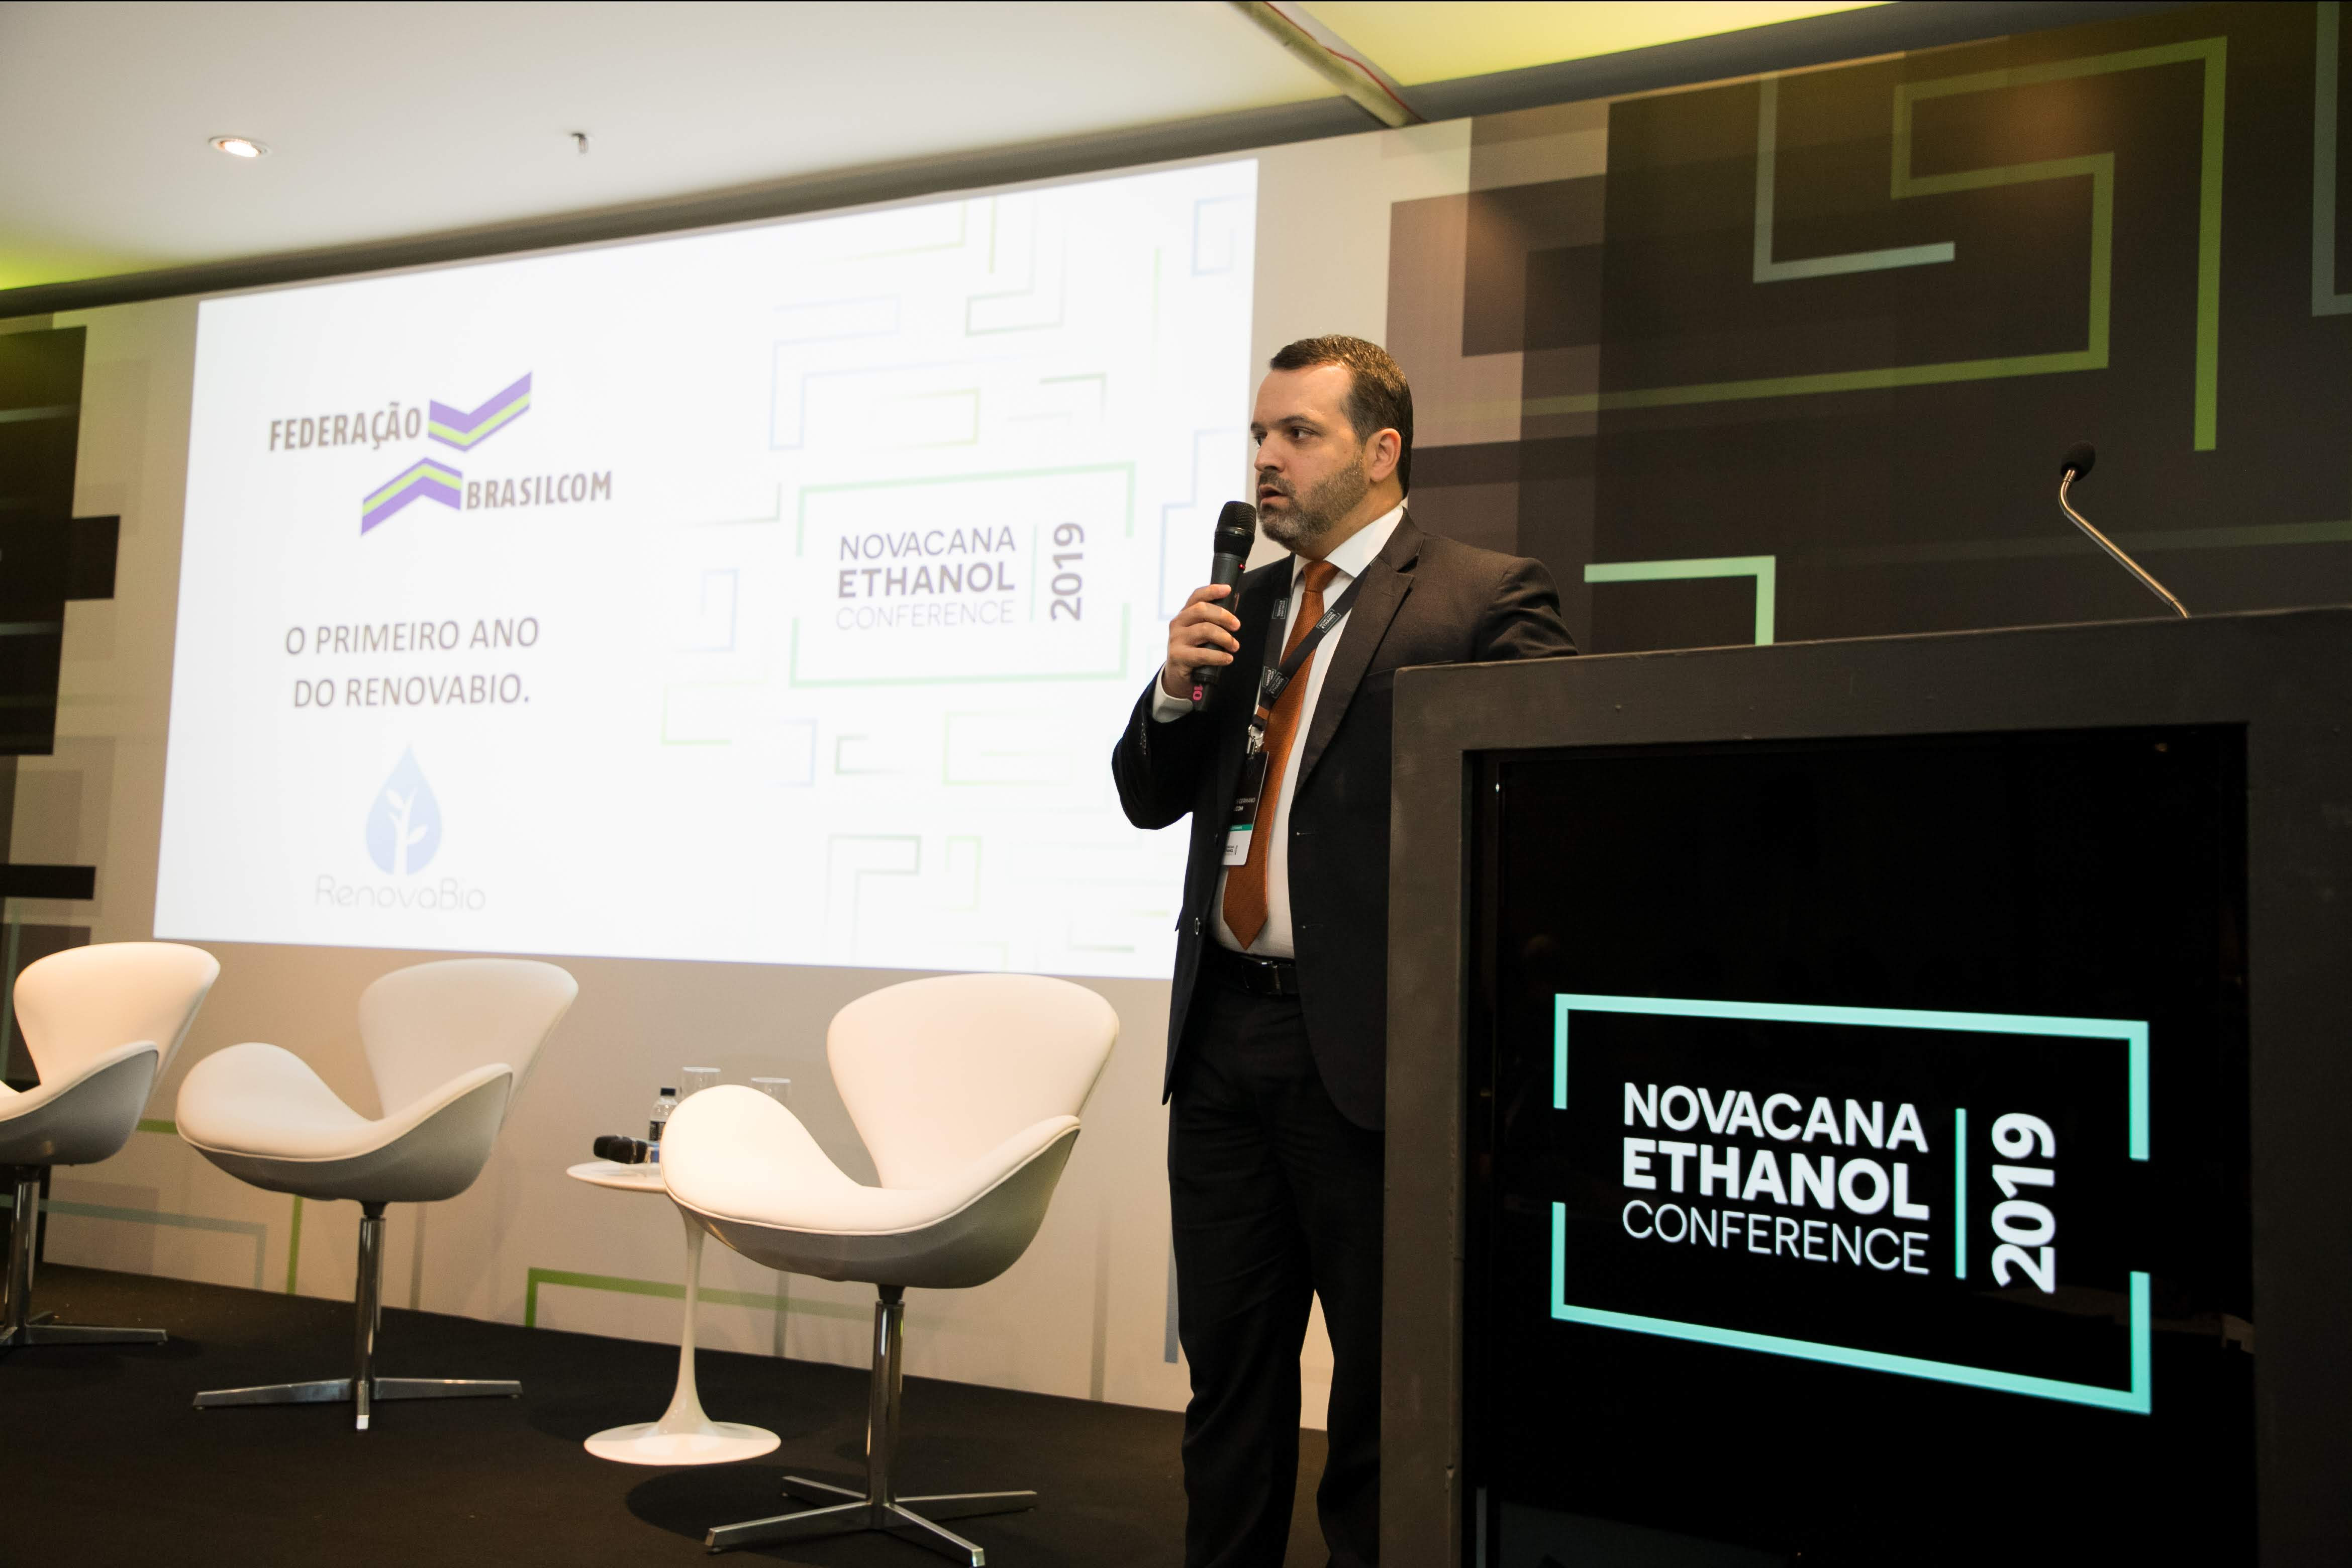 Novacana Ethanol Conference 2019